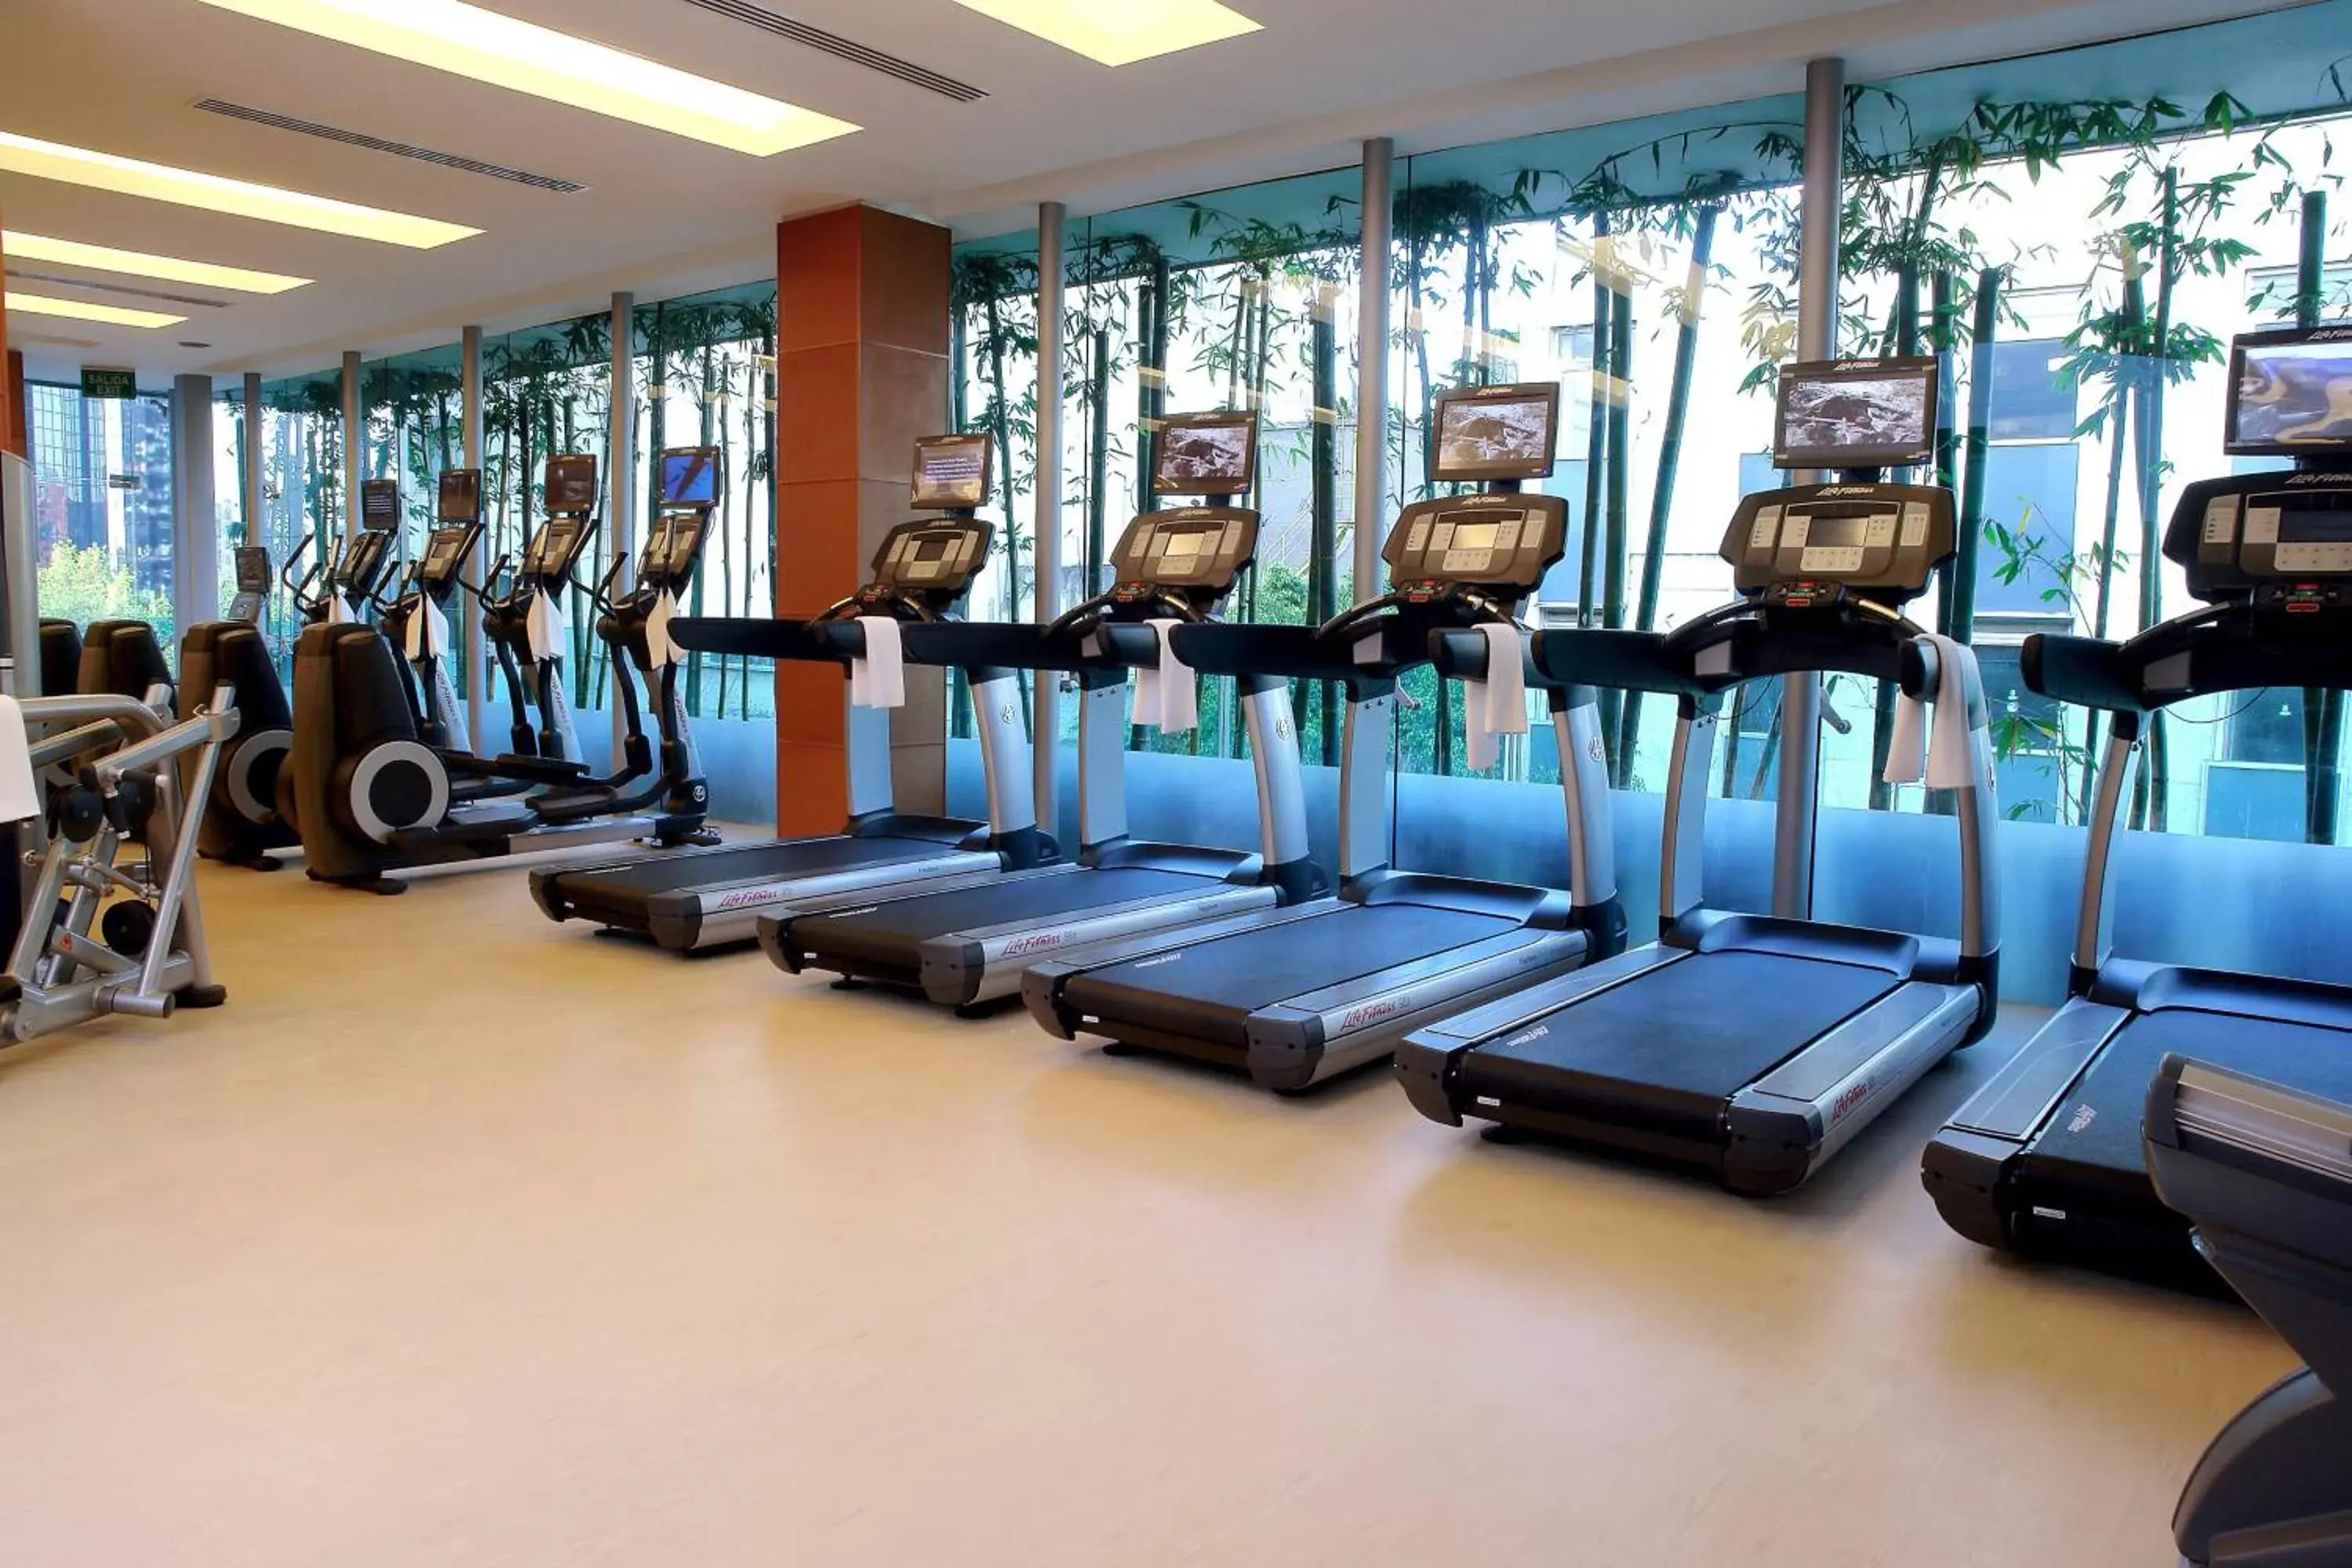 Fitness centre/facilities, Fitness Center/Facilities in Mexico City Marriott Reforma Hotel